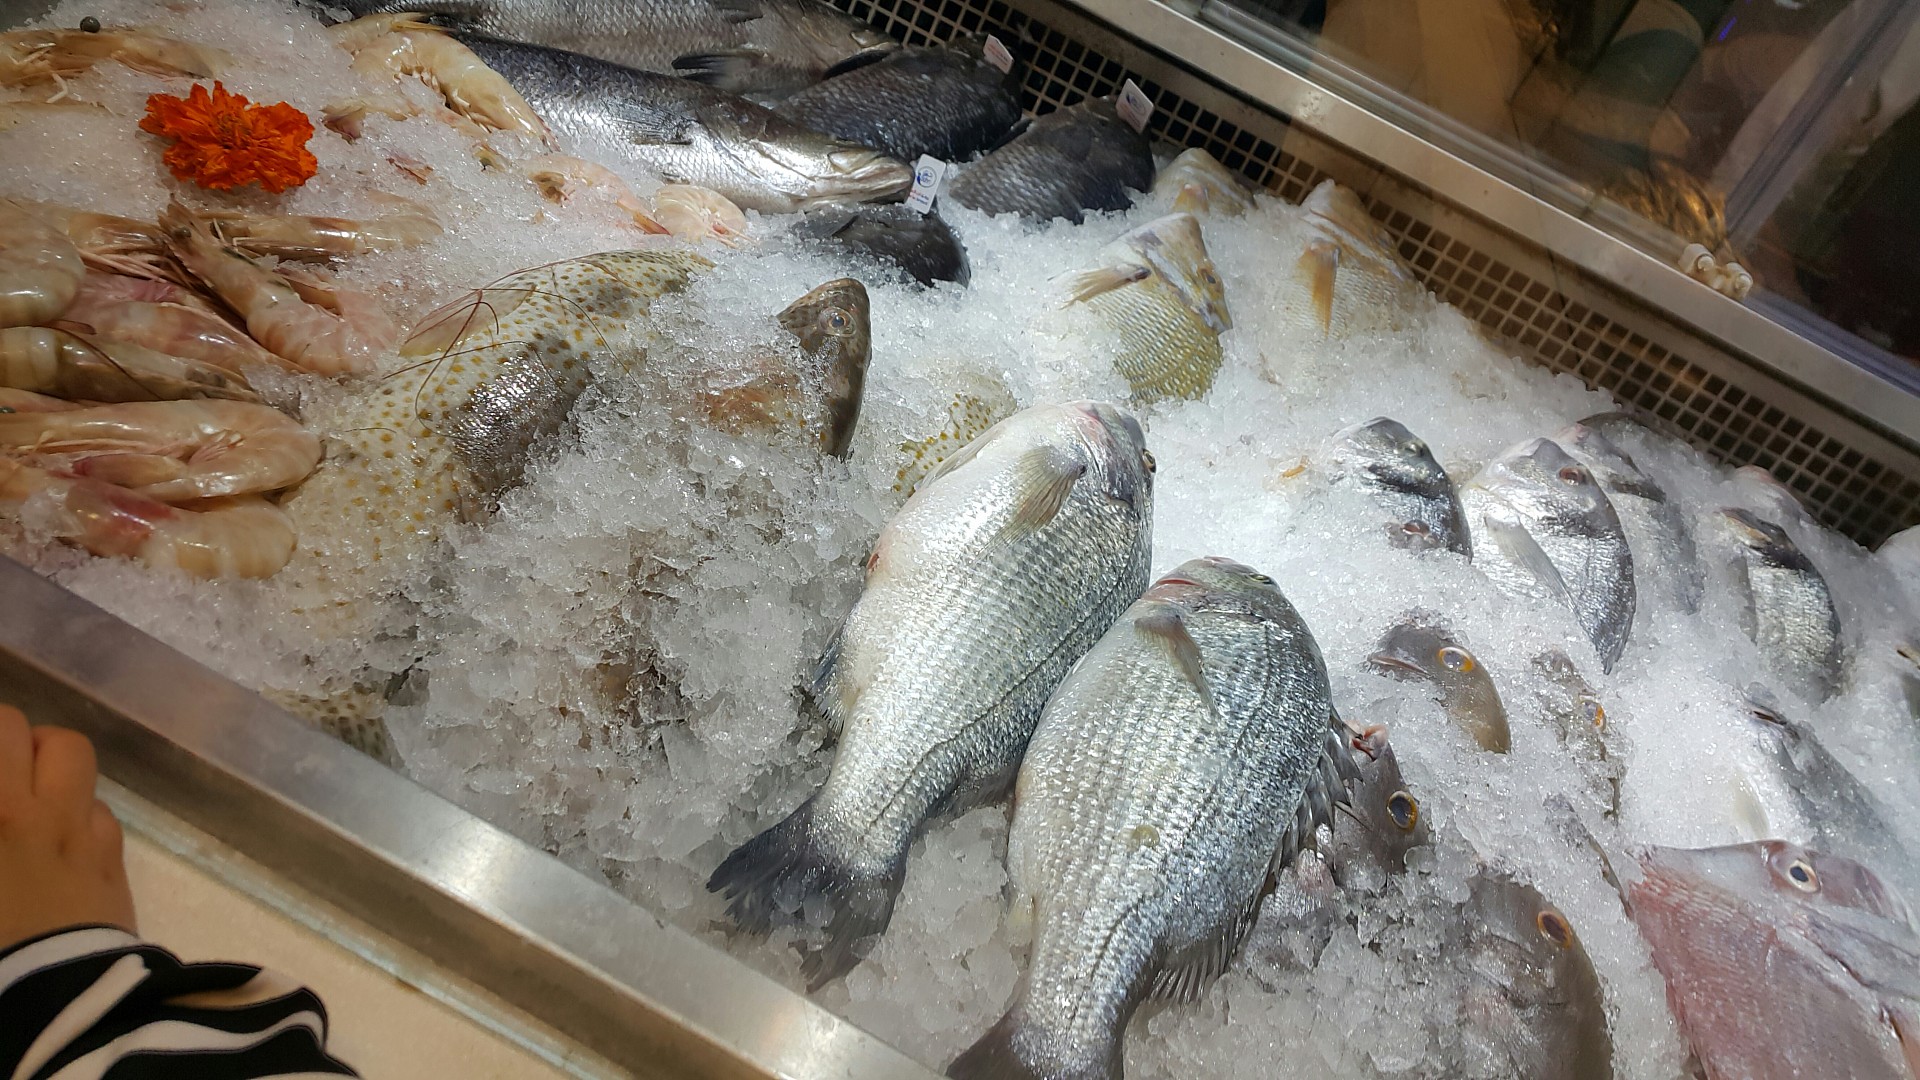 Fresh local seafood 👍 @ Banoosh Al Arab - Bahrain